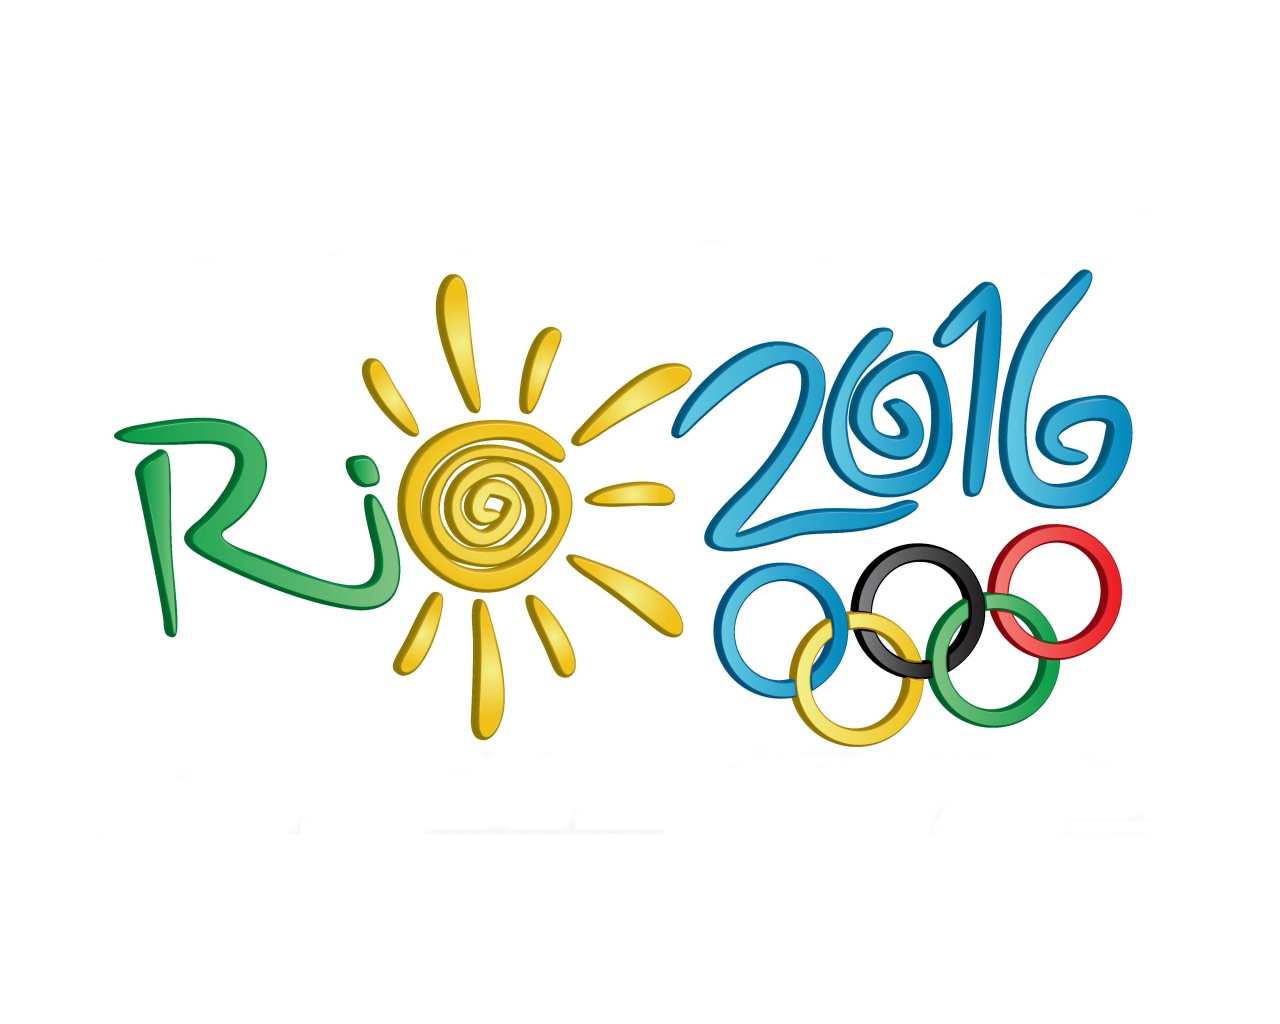 Brazil Rio 2016 Olympic Games